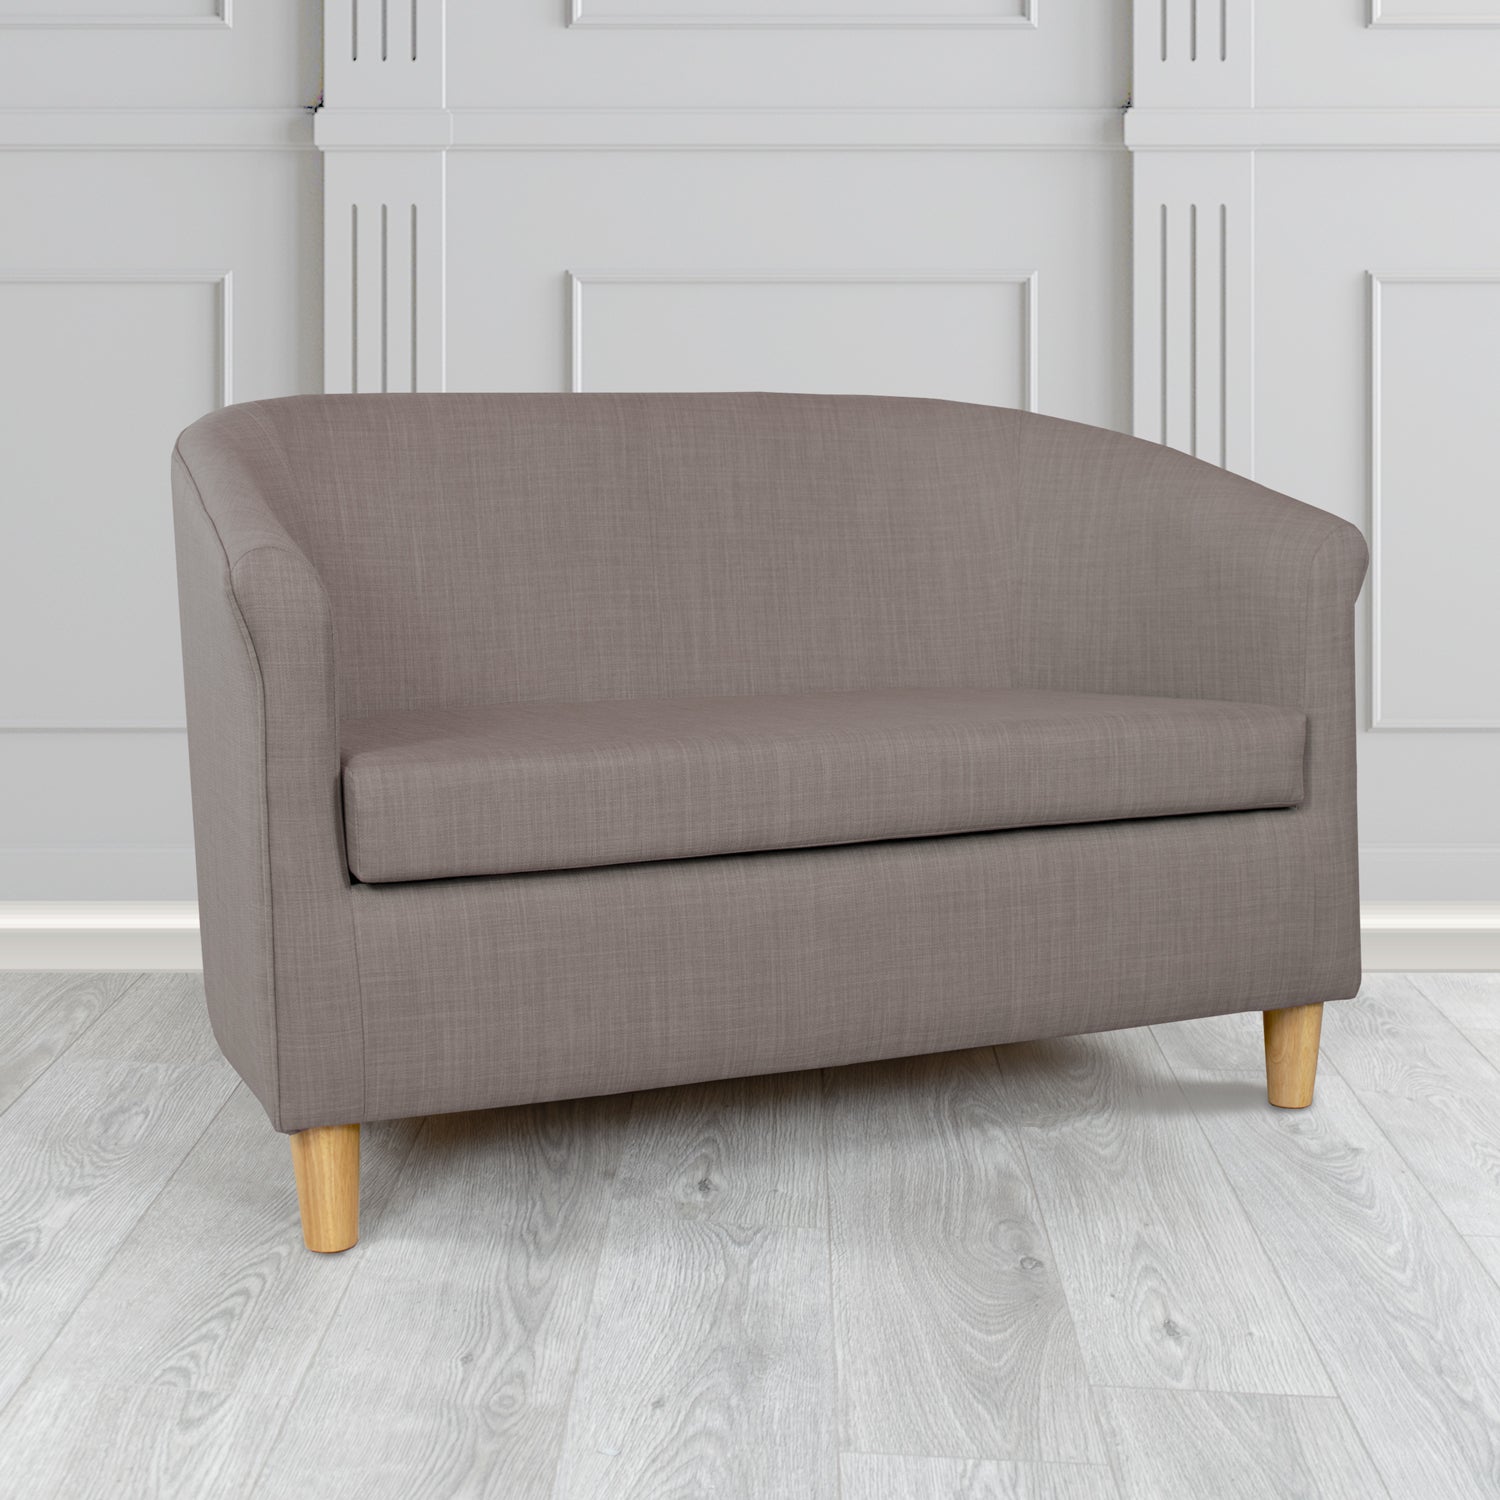 Tuscany Charles Slate Plain Linen Fabric 2 Seater Tub Sofa - The Tub Chair Shop